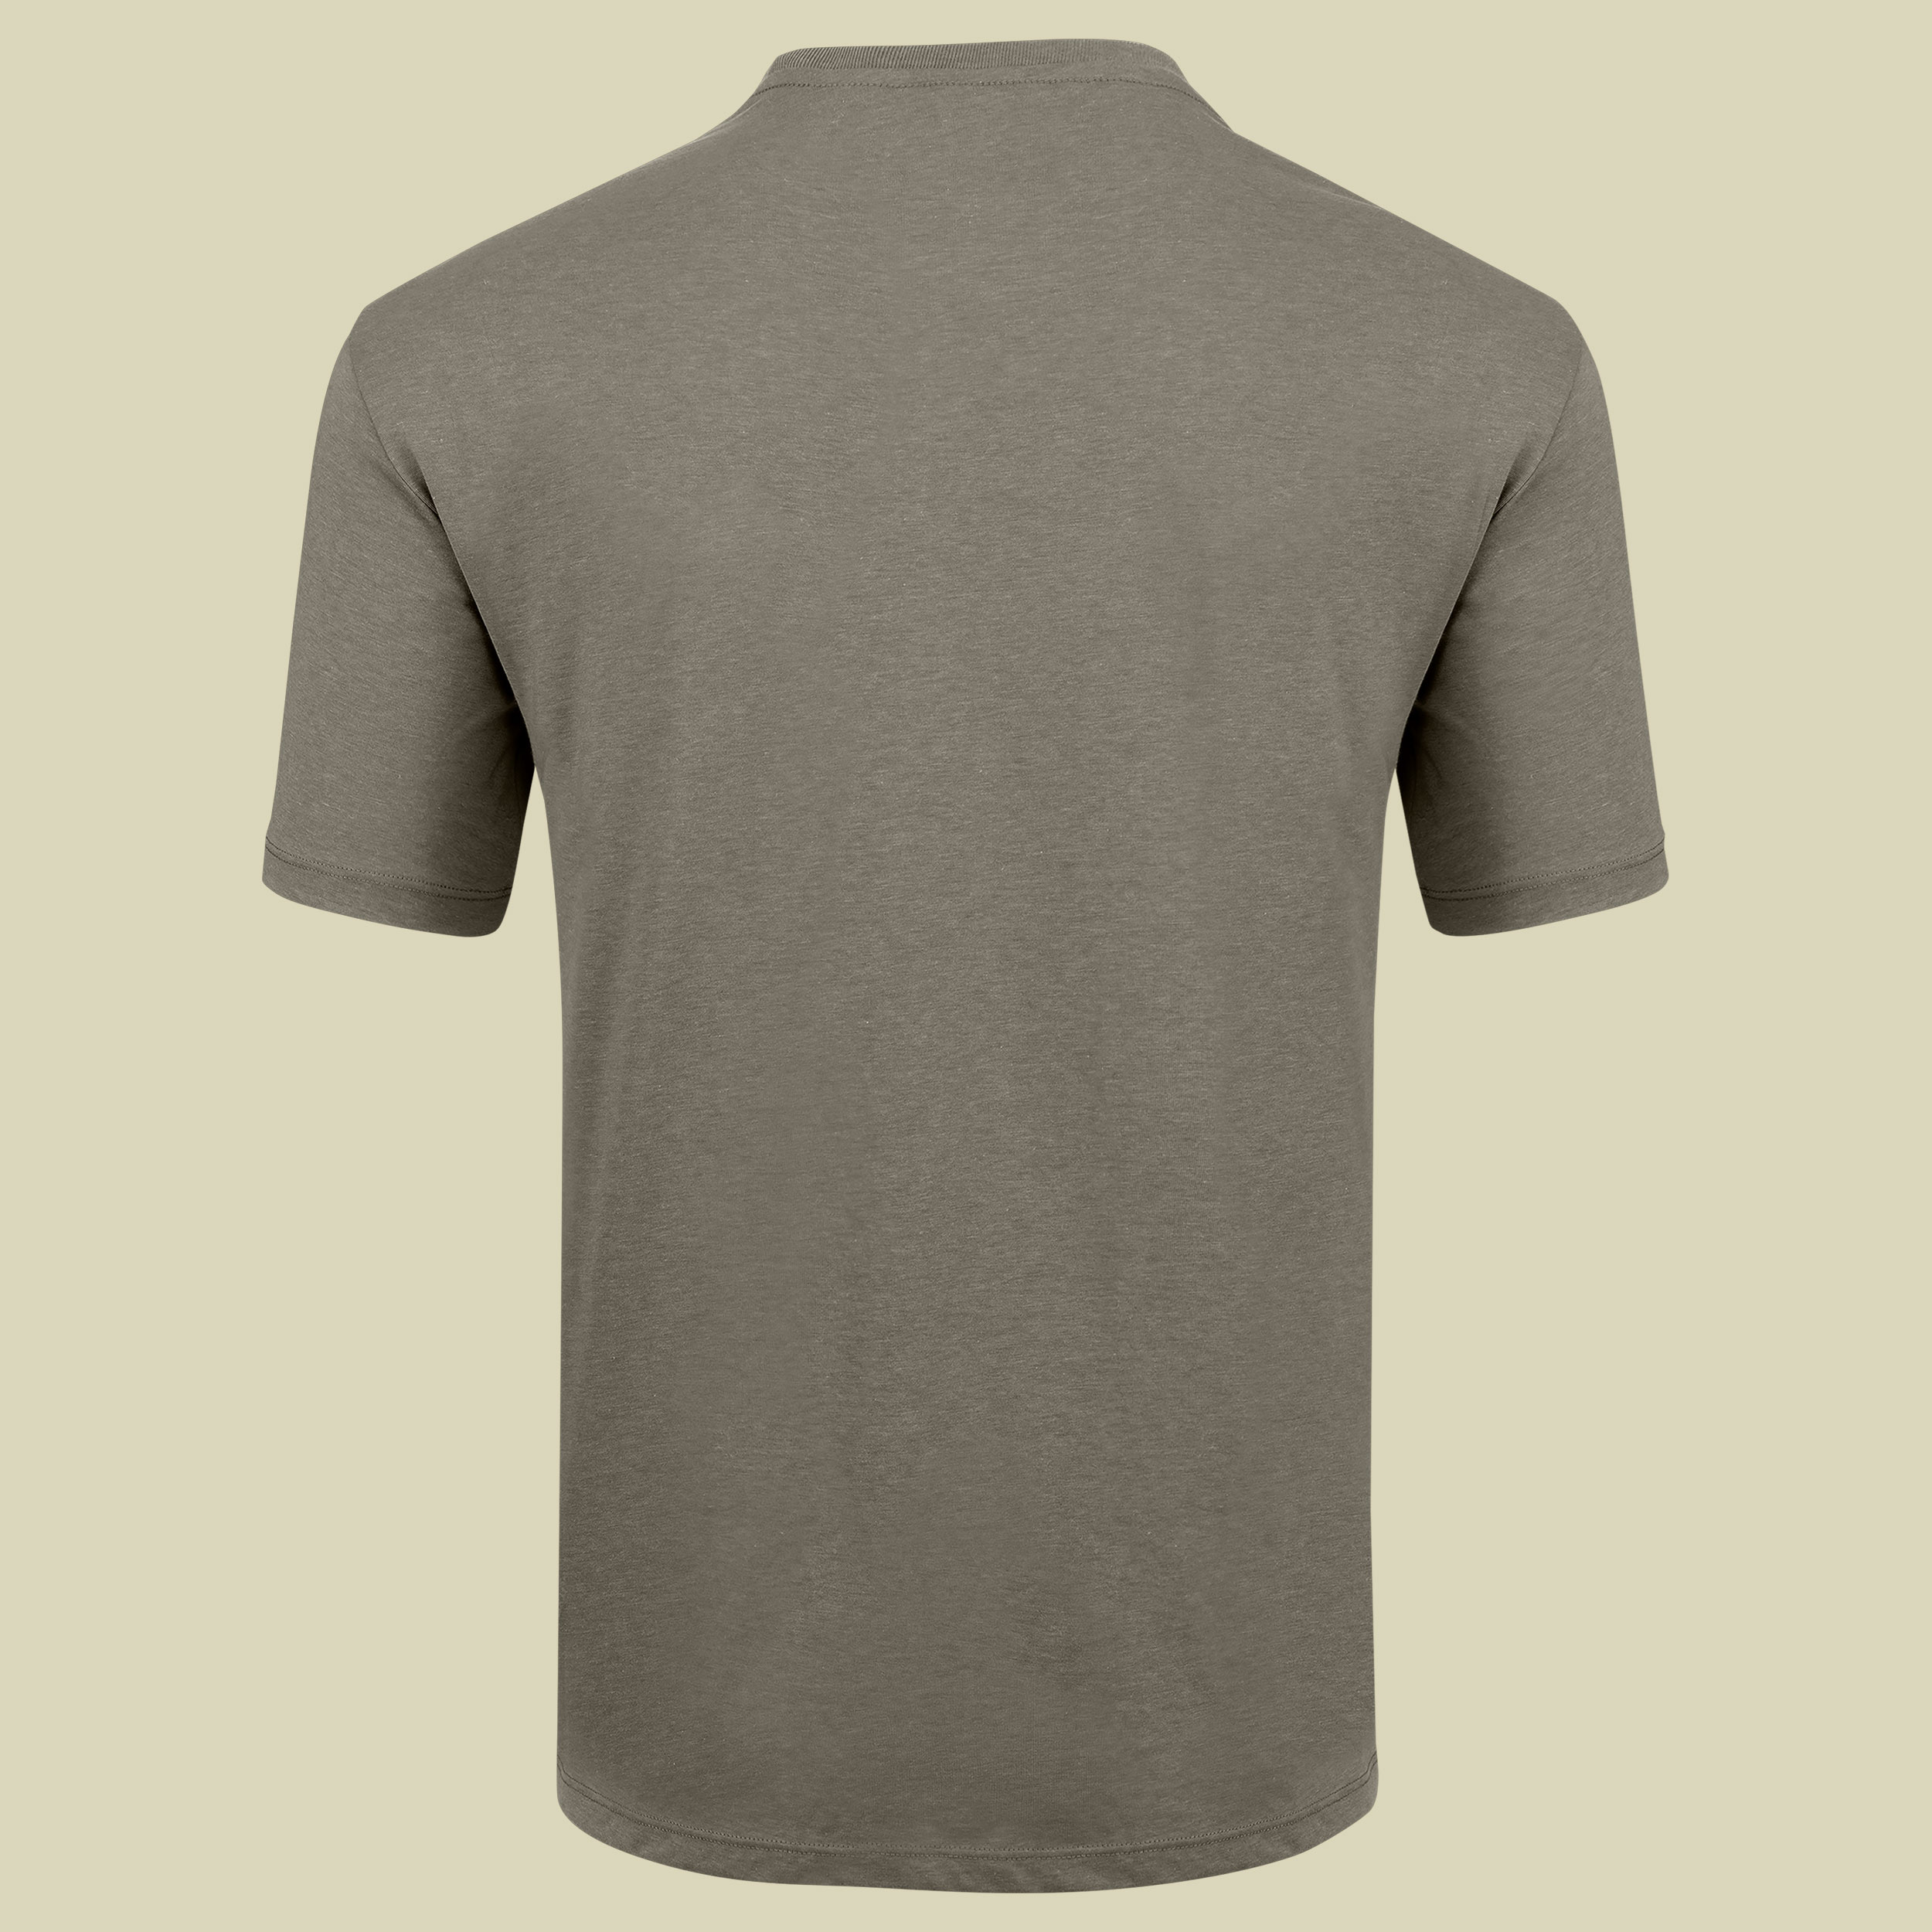 Lines Graphic Dry M T-Shirt Men Größe 48 (M) Farbe bungee cord melange